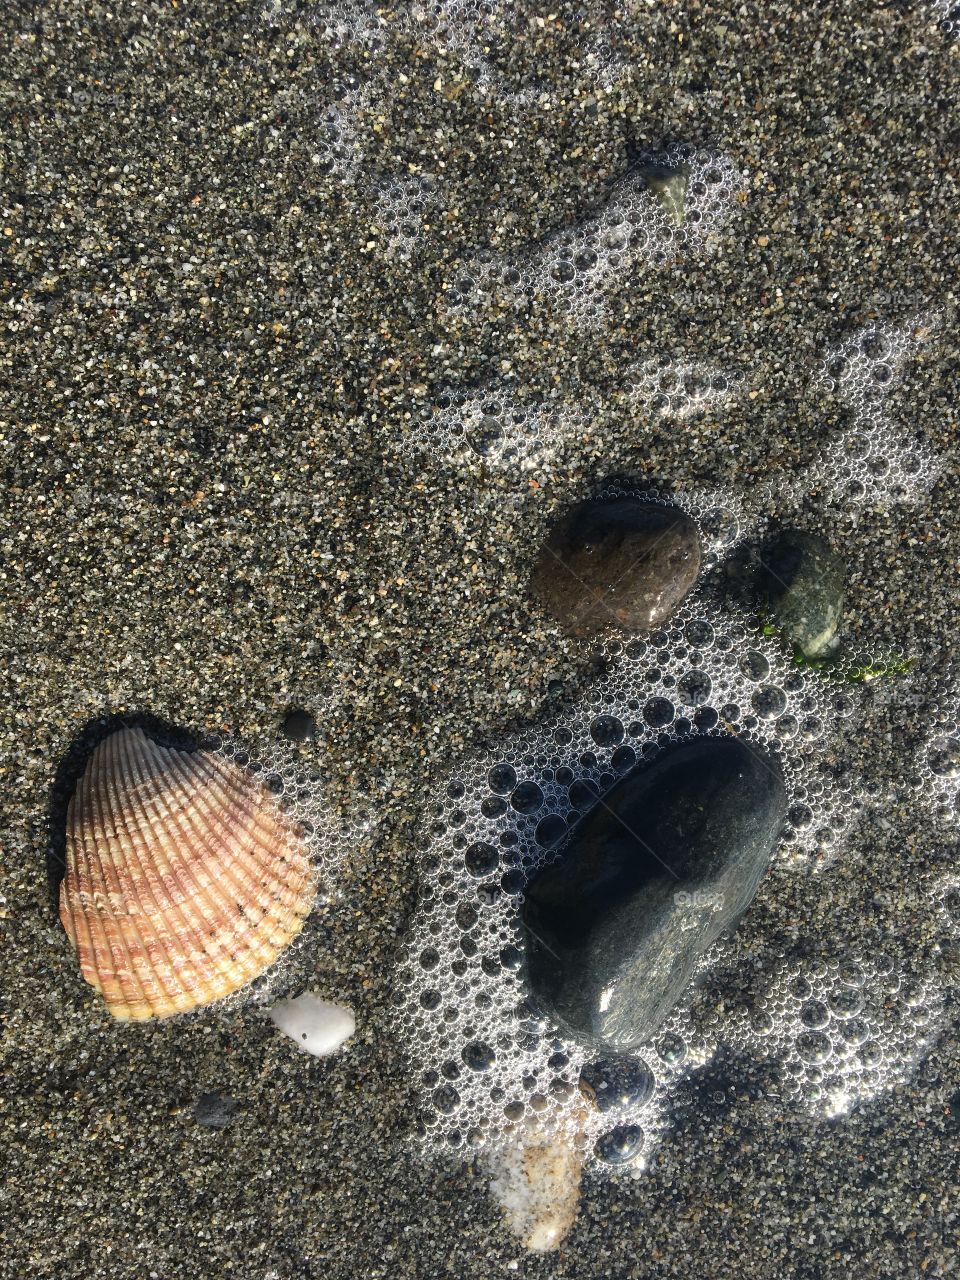 Bubbles and shells